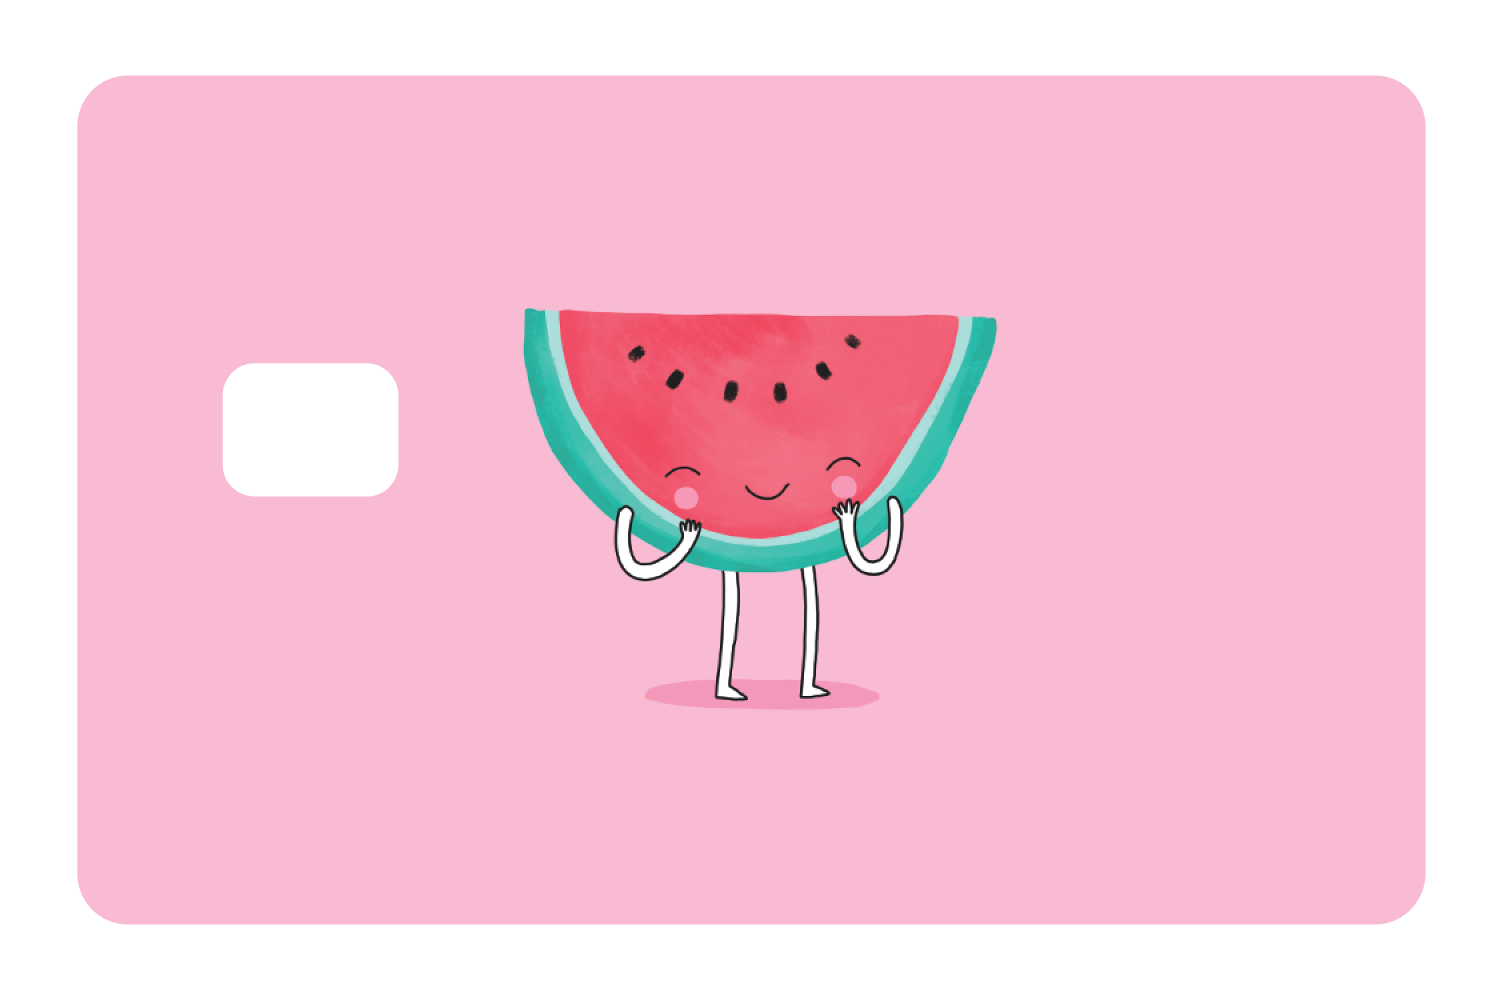 Watermelon Smiles